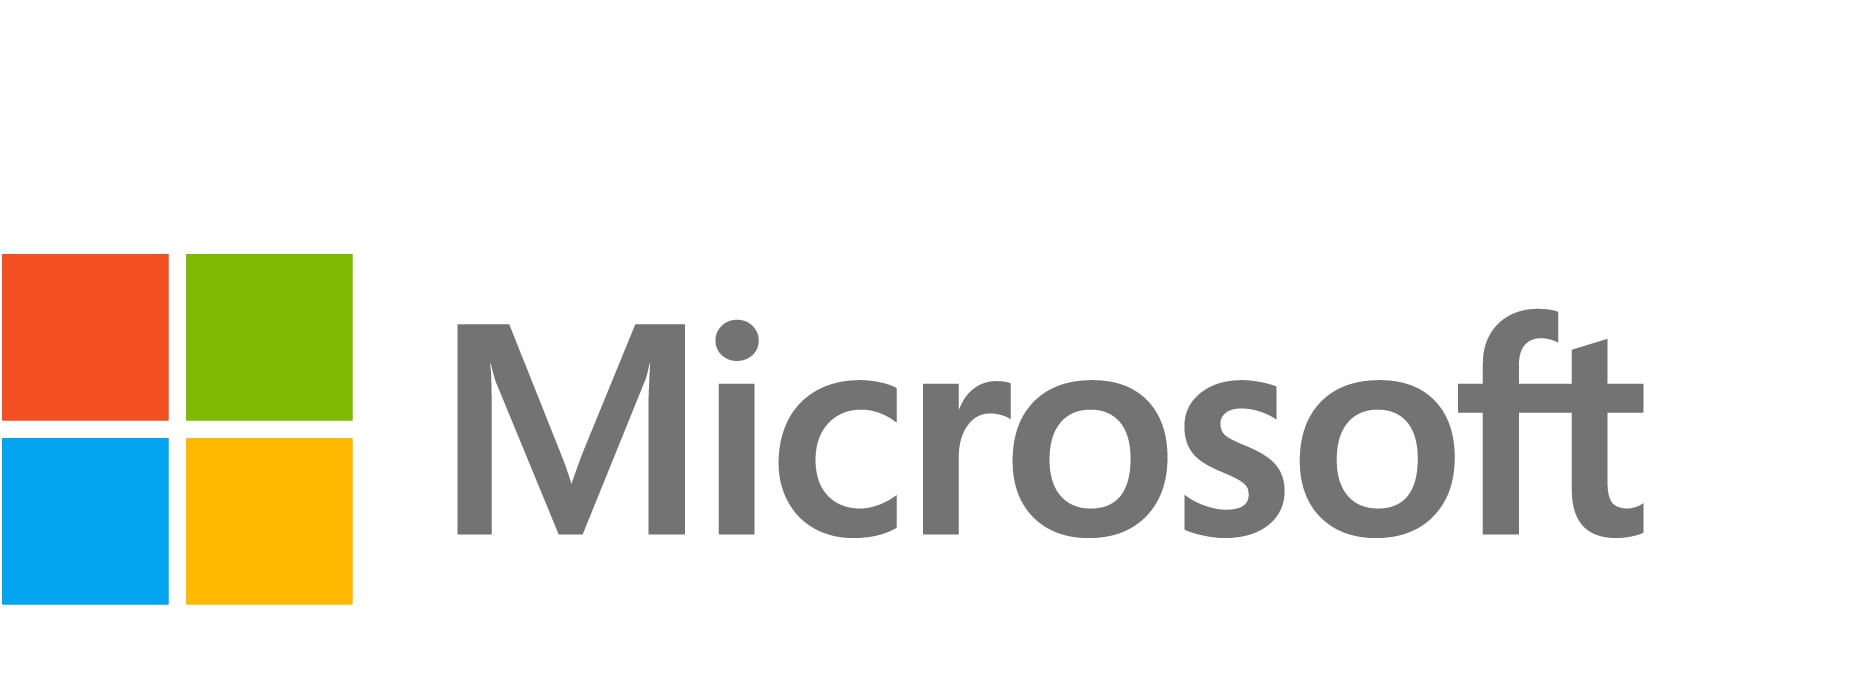 Microsoft Office Standard Edition - software assurance - 1 device